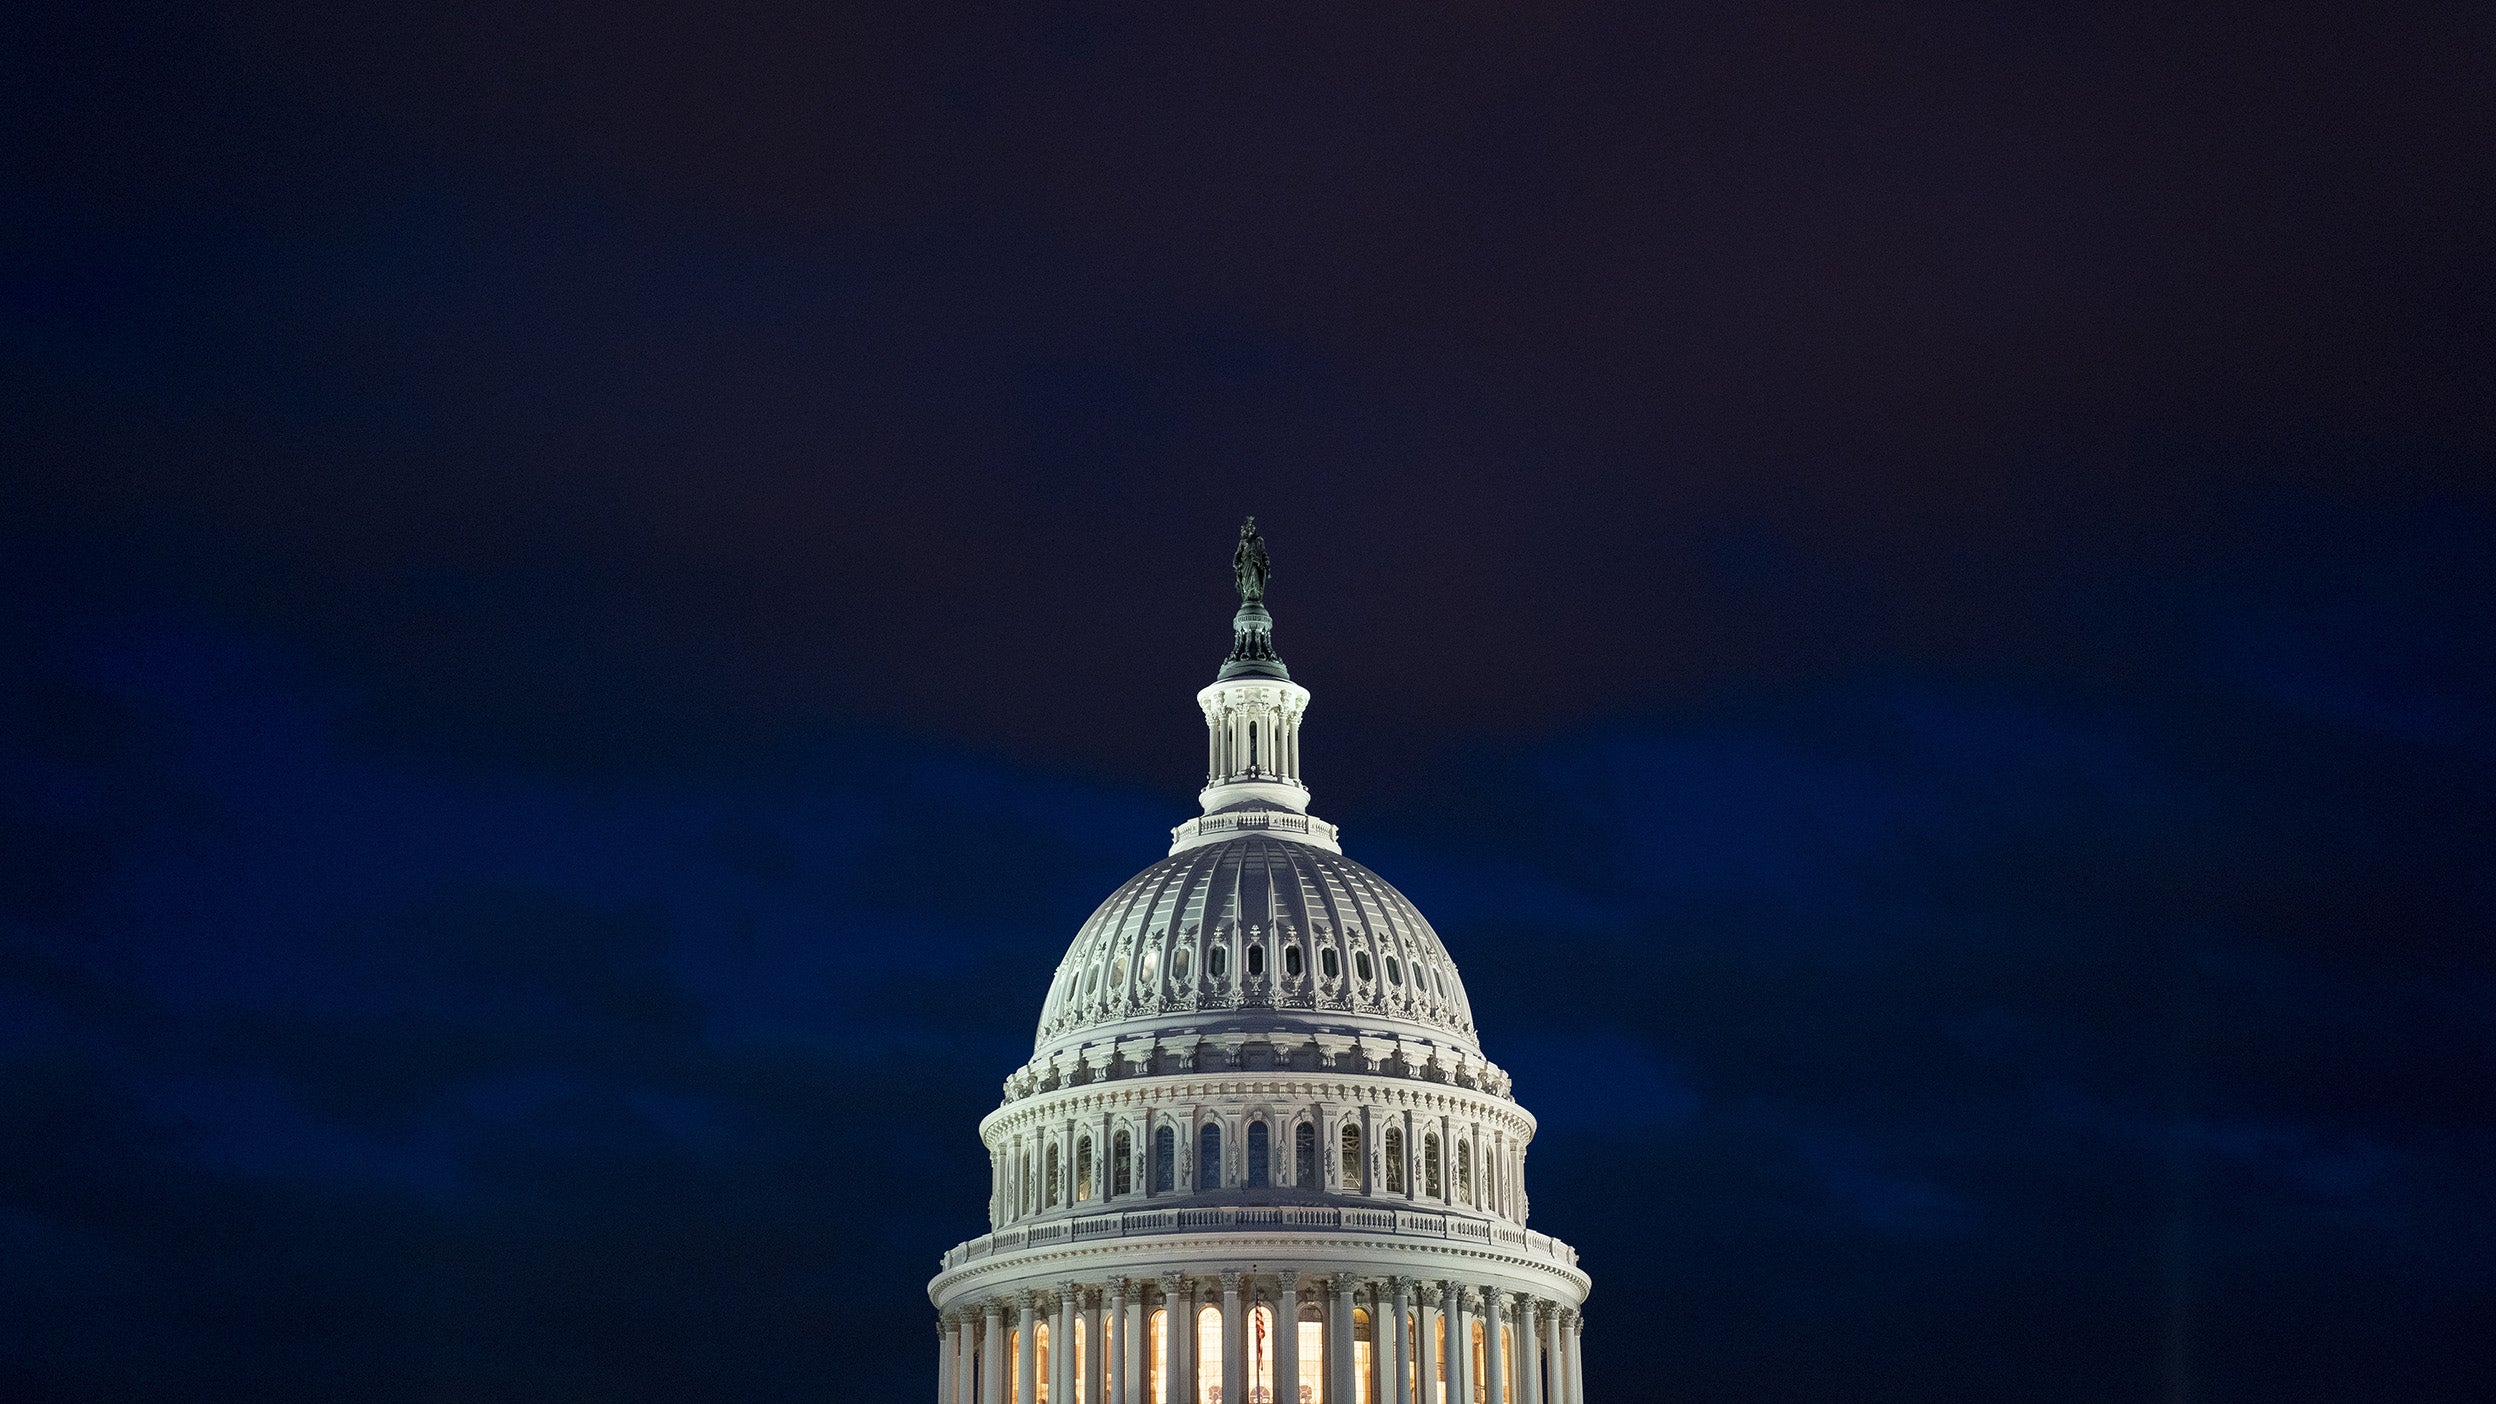 The U.S. Capitol building illuminated against a dark sky in Washington, D.C.